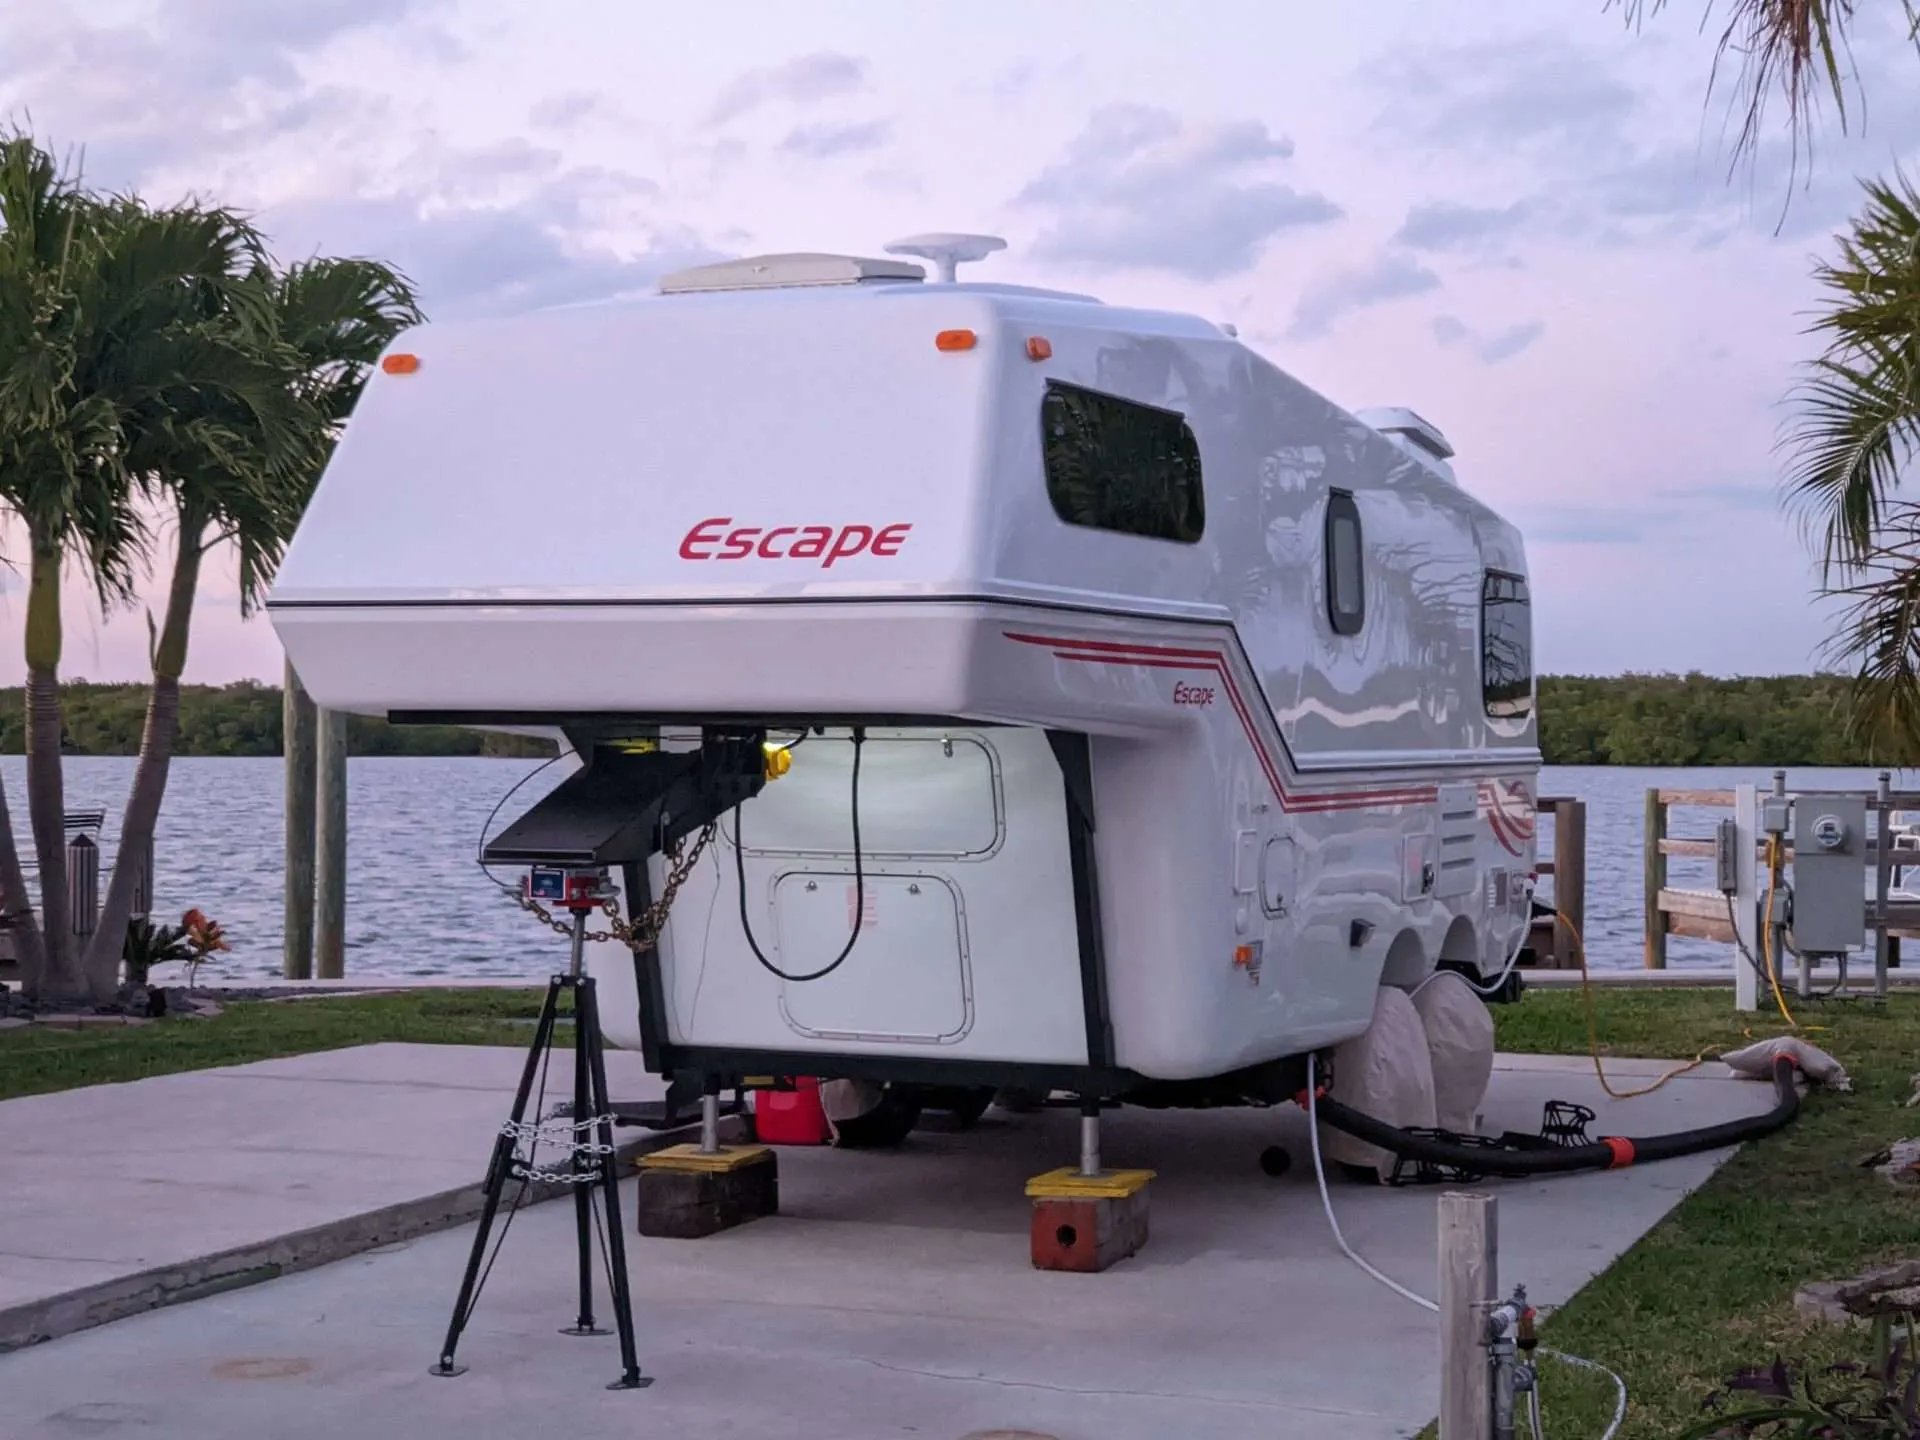 Escape fiberglass camper parked next to lake.